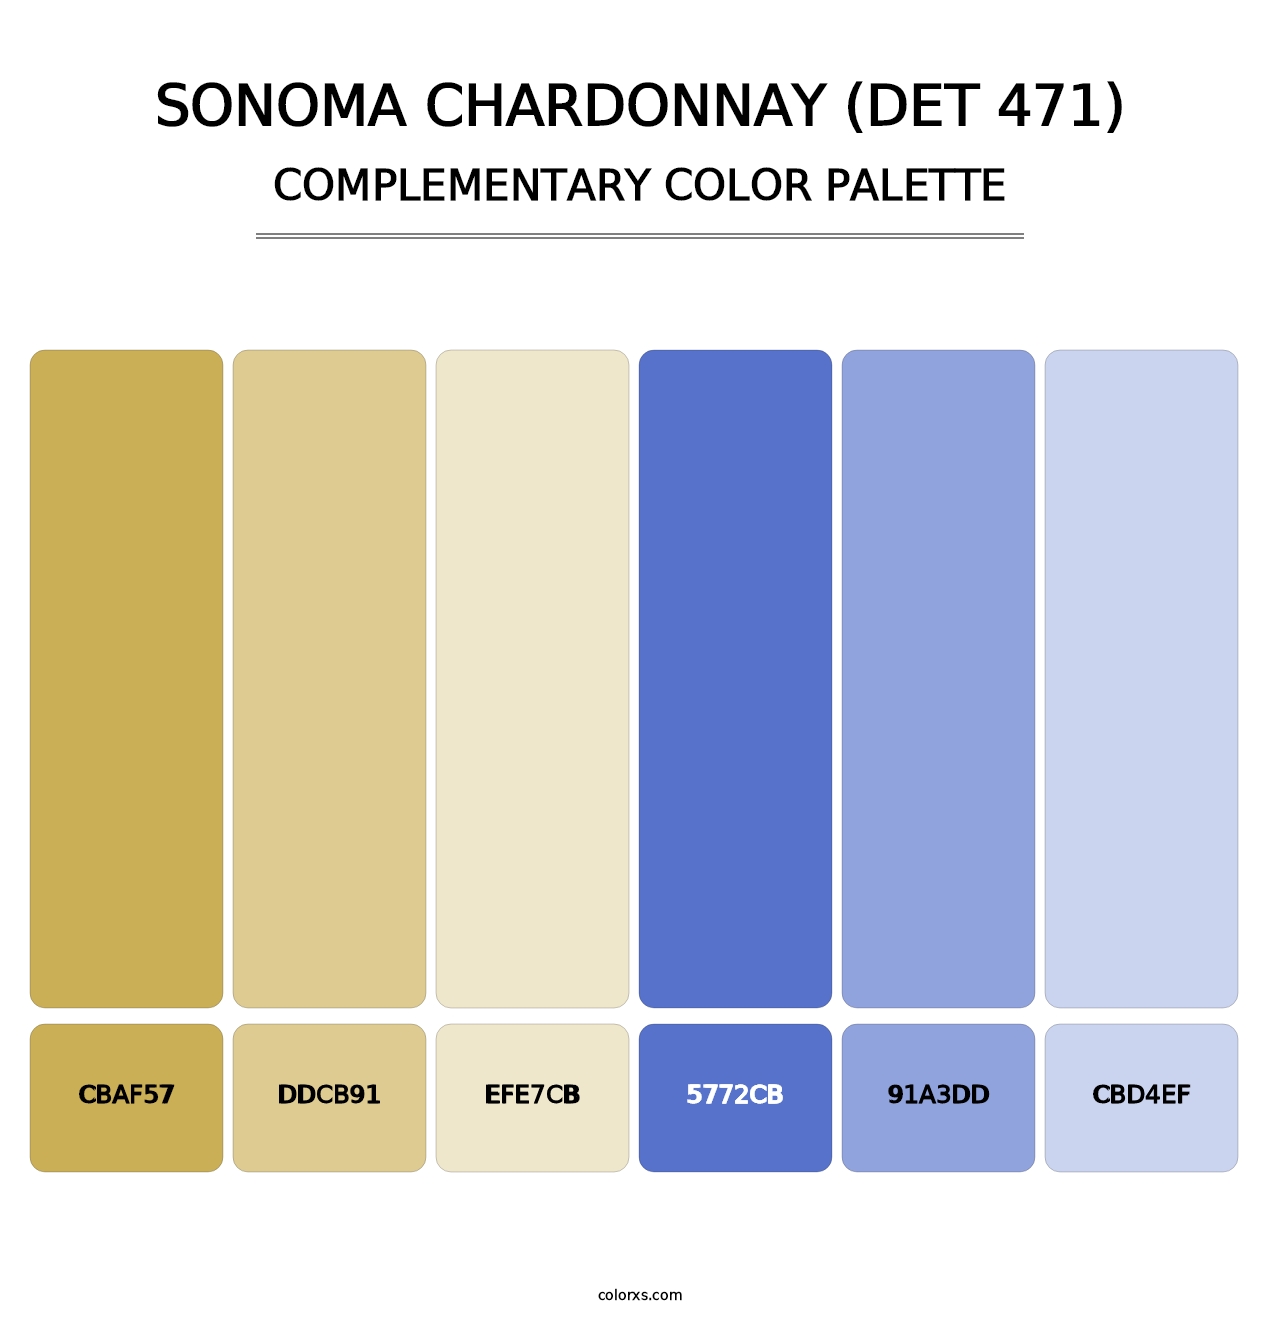 Sonoma Chardonnay (DET 471) - Complementary Color Palette